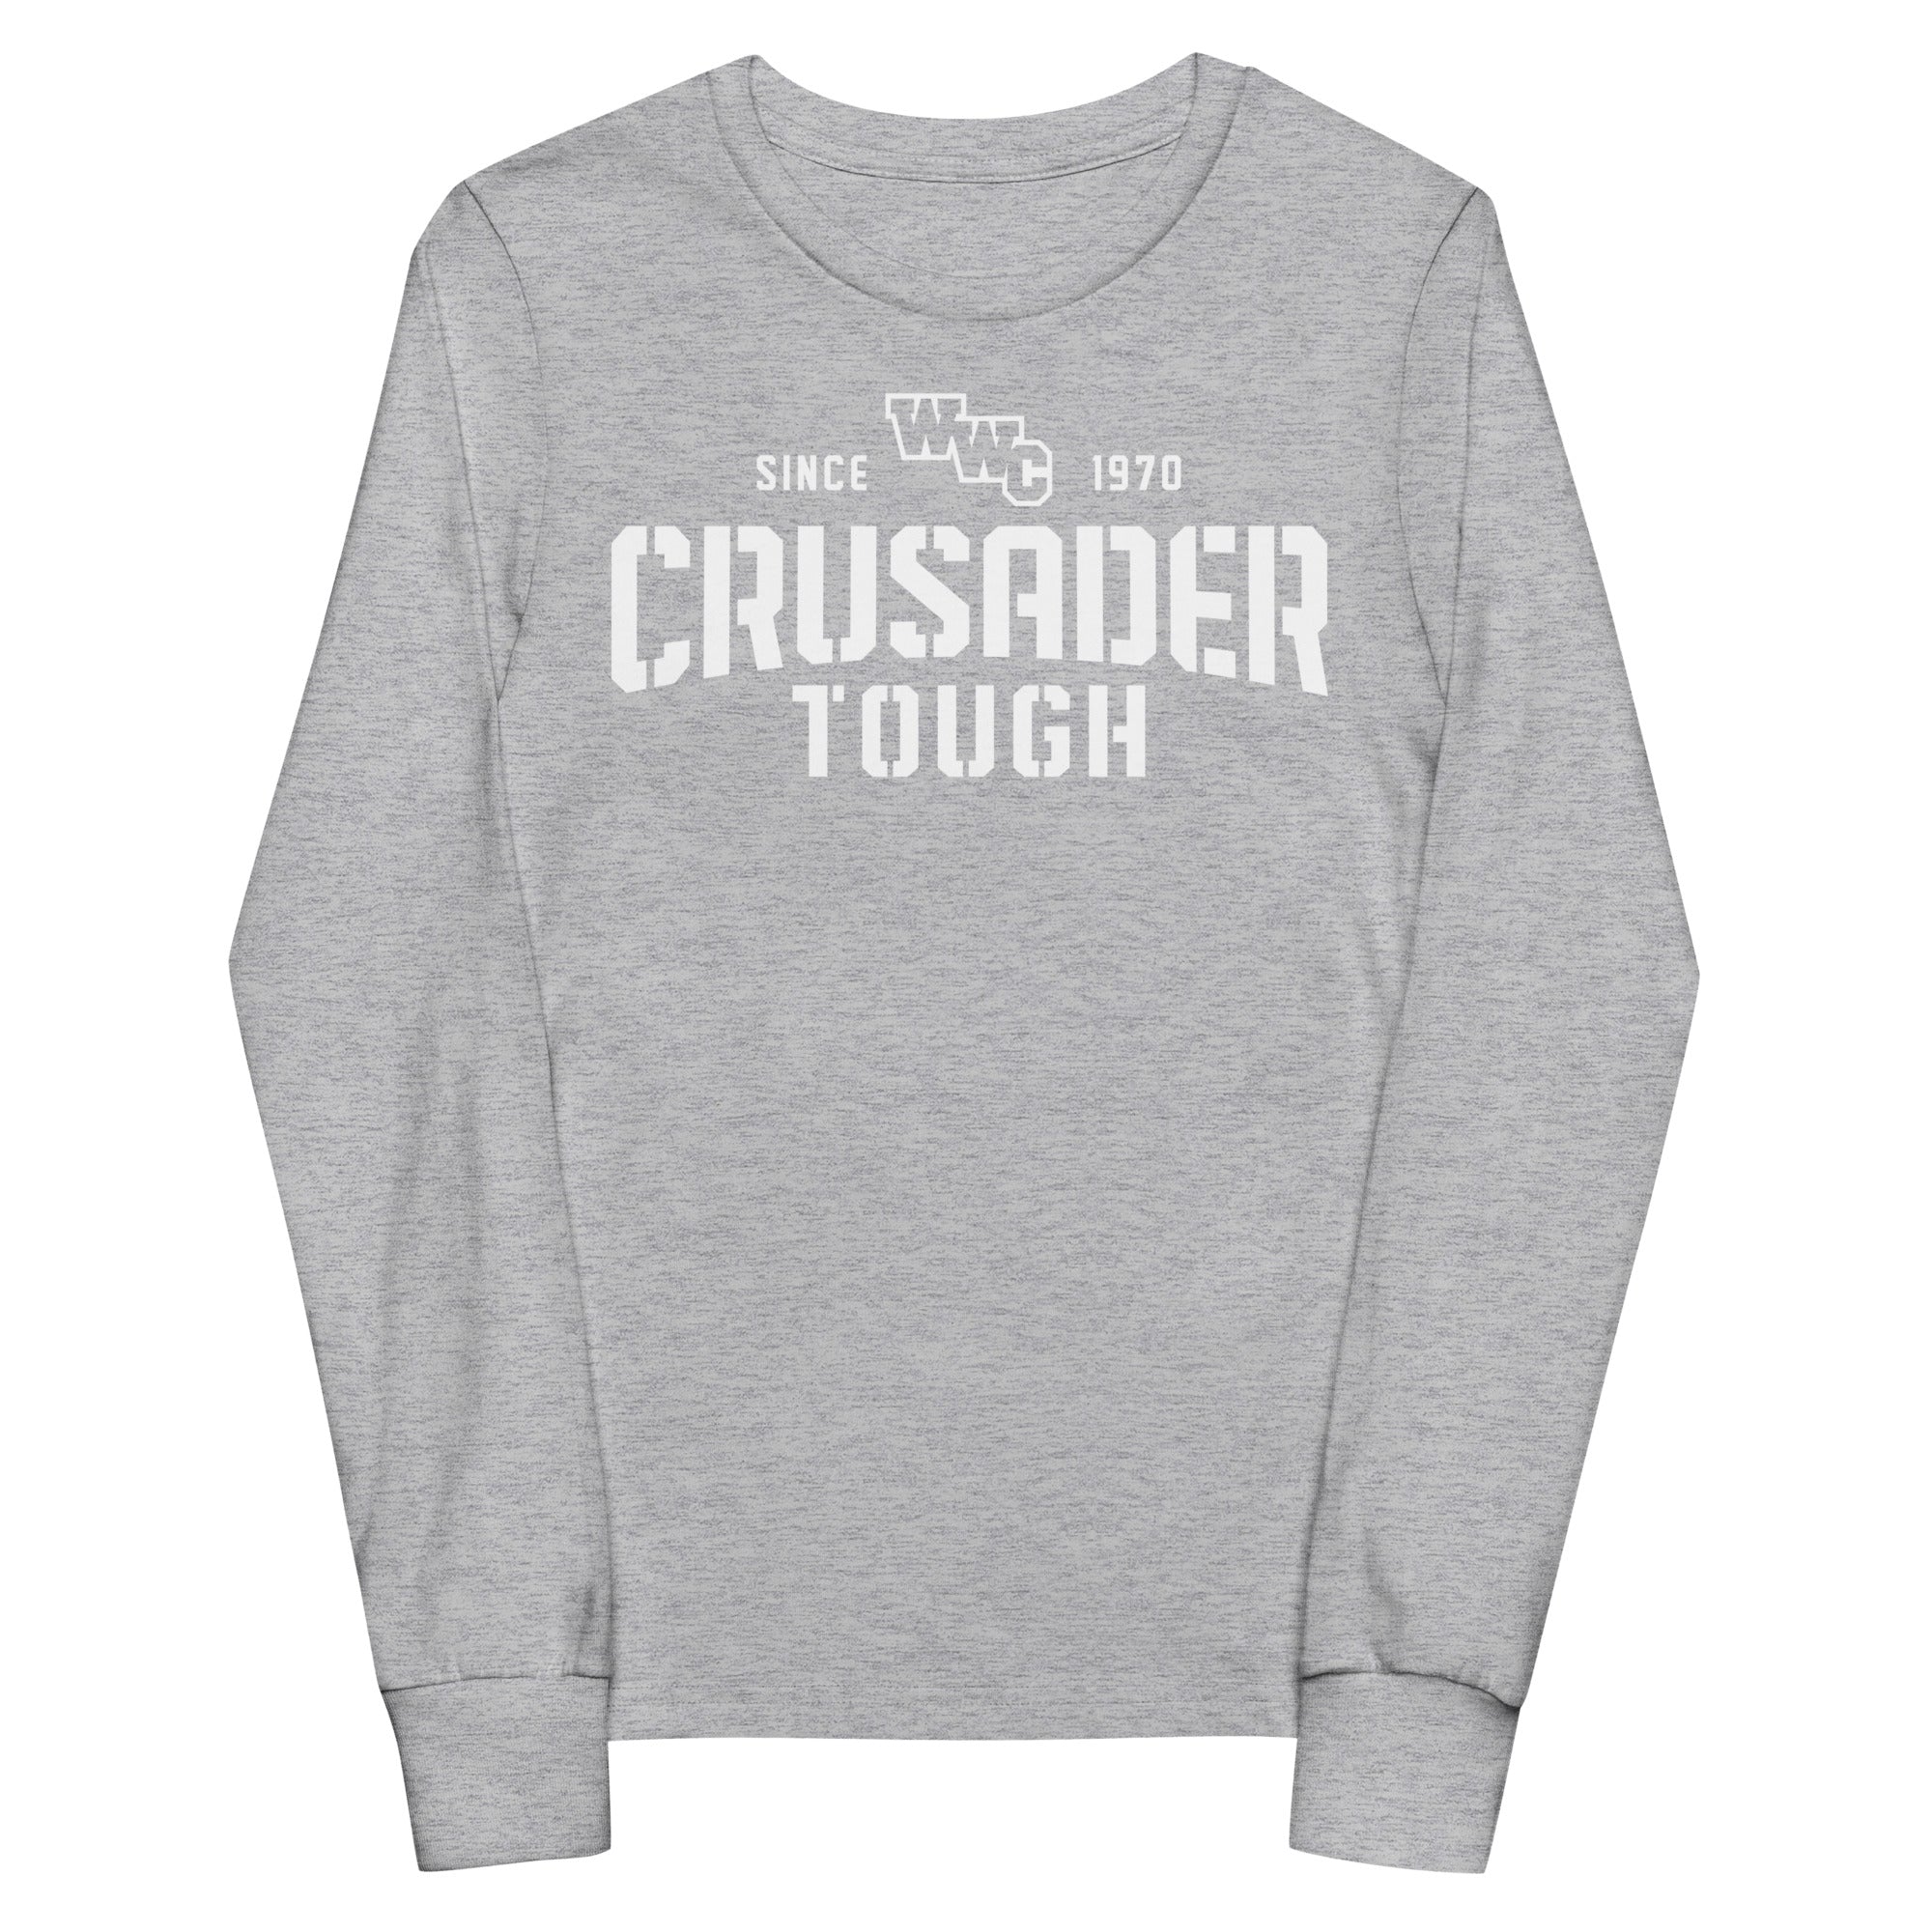 WWC Crusader Tough Youth long sleeve tee